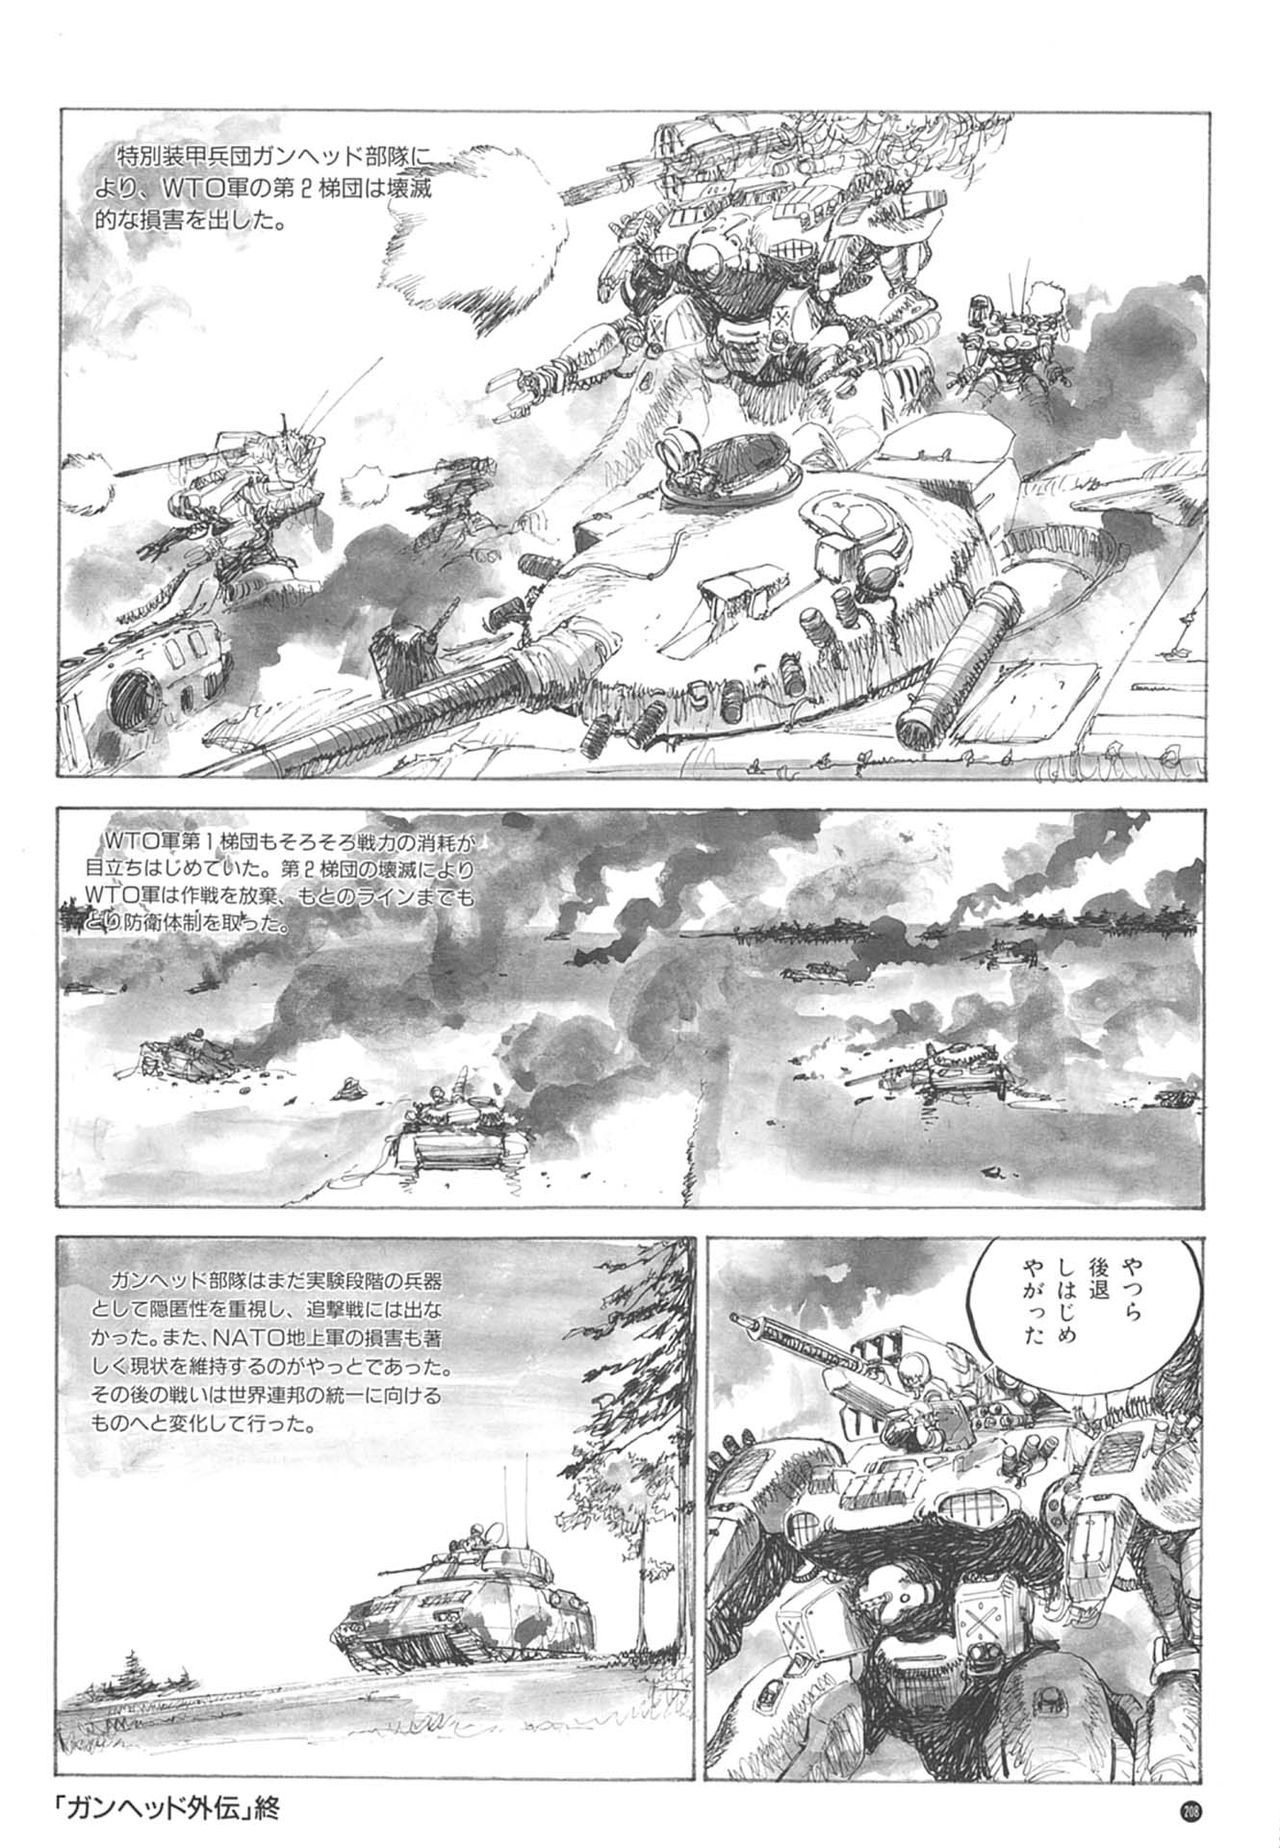 [Kazuhisa Kondo] Kazuhisa Kondo 2D & 3D Works - Go Ahead - From Mobile Suit Gundam to Original Mechanism 207